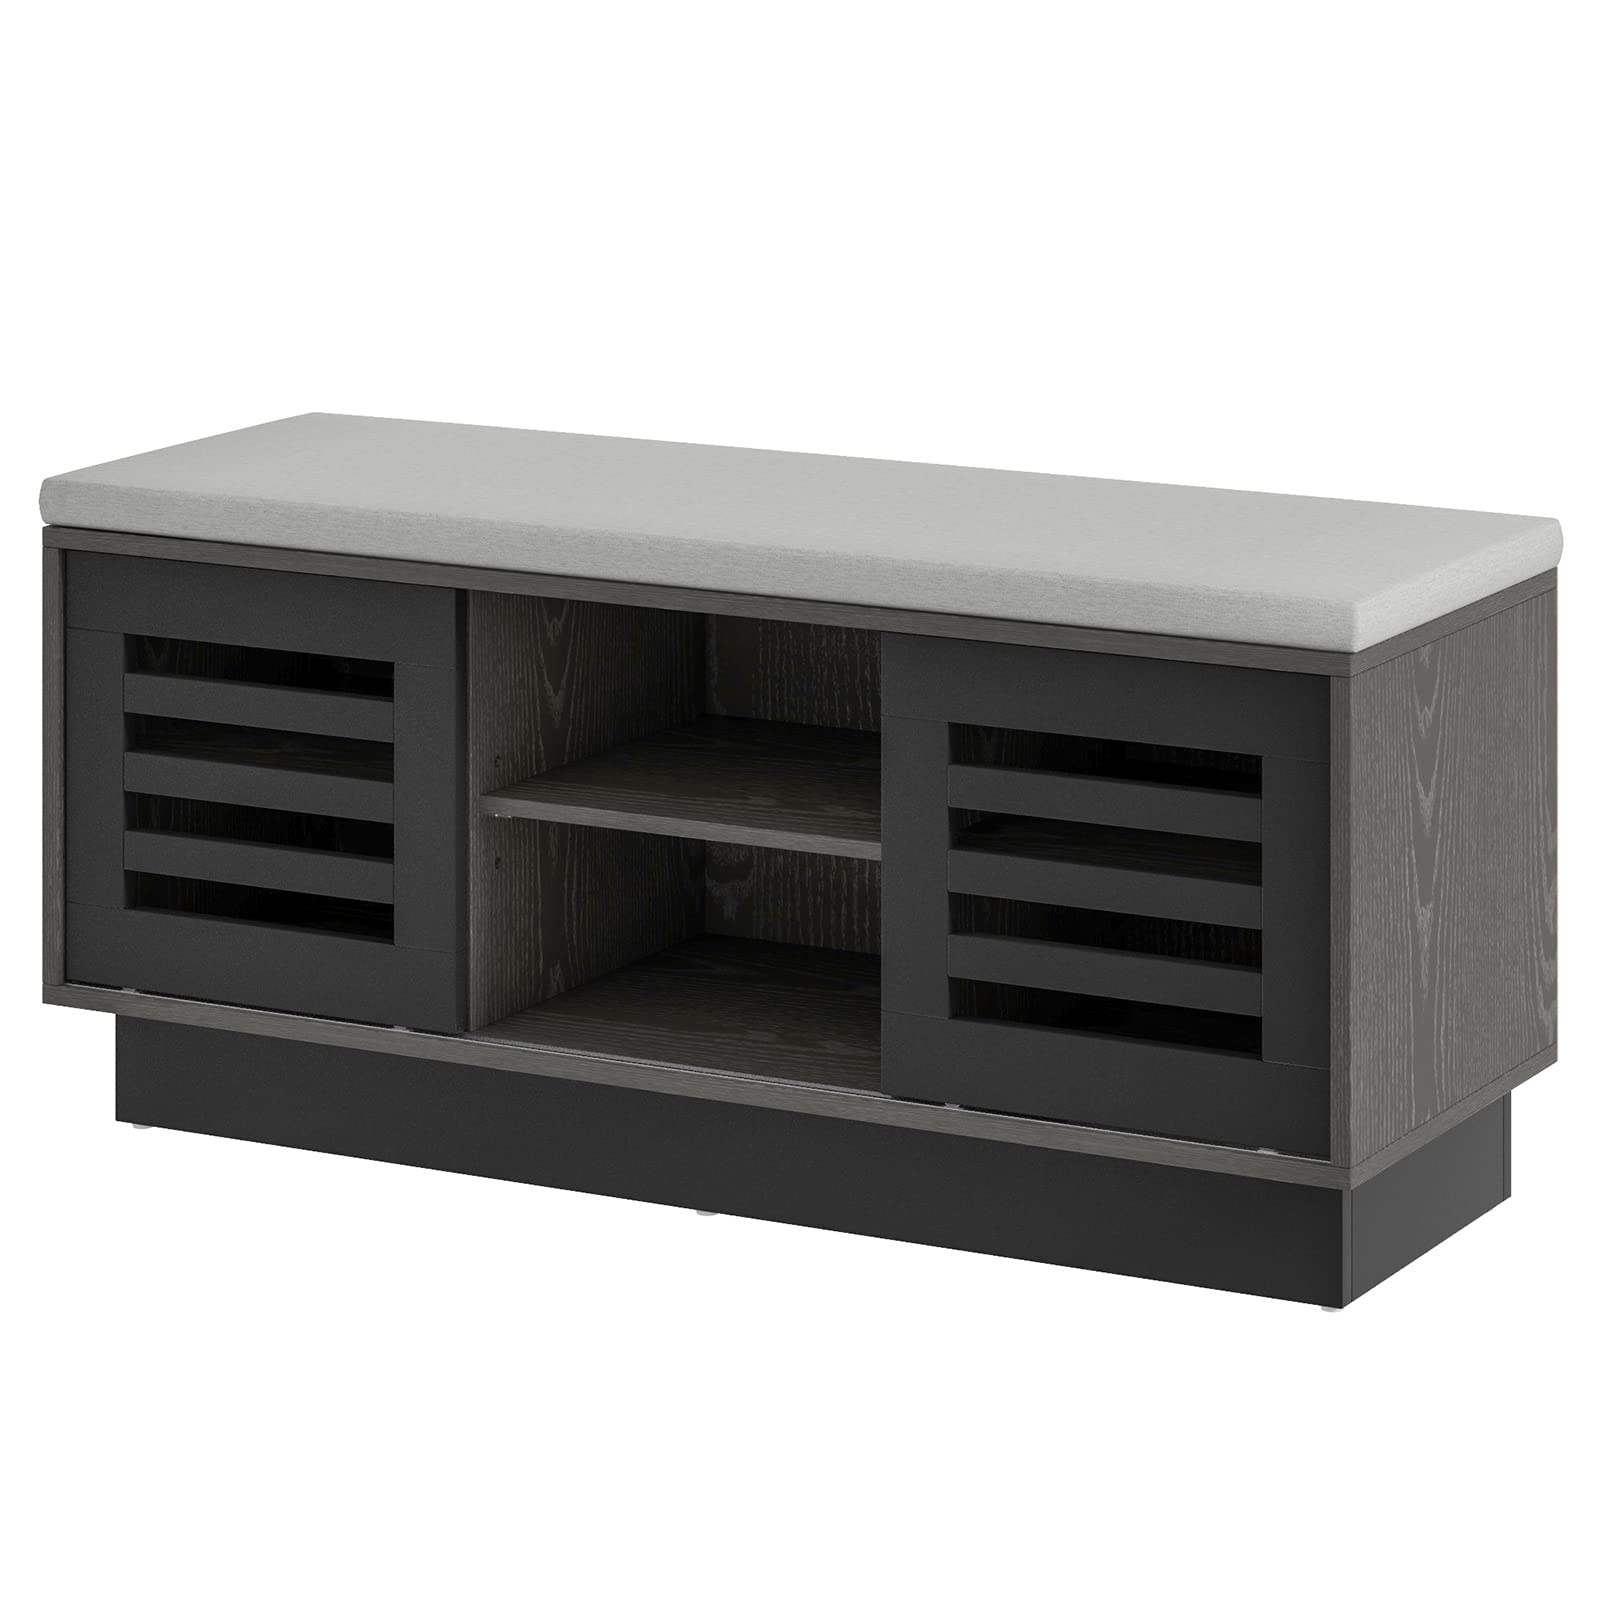 Giantex Entryway Shoe Storage Bench - Shoe Rack w/Seat Cushion & 6 Storage Compartments